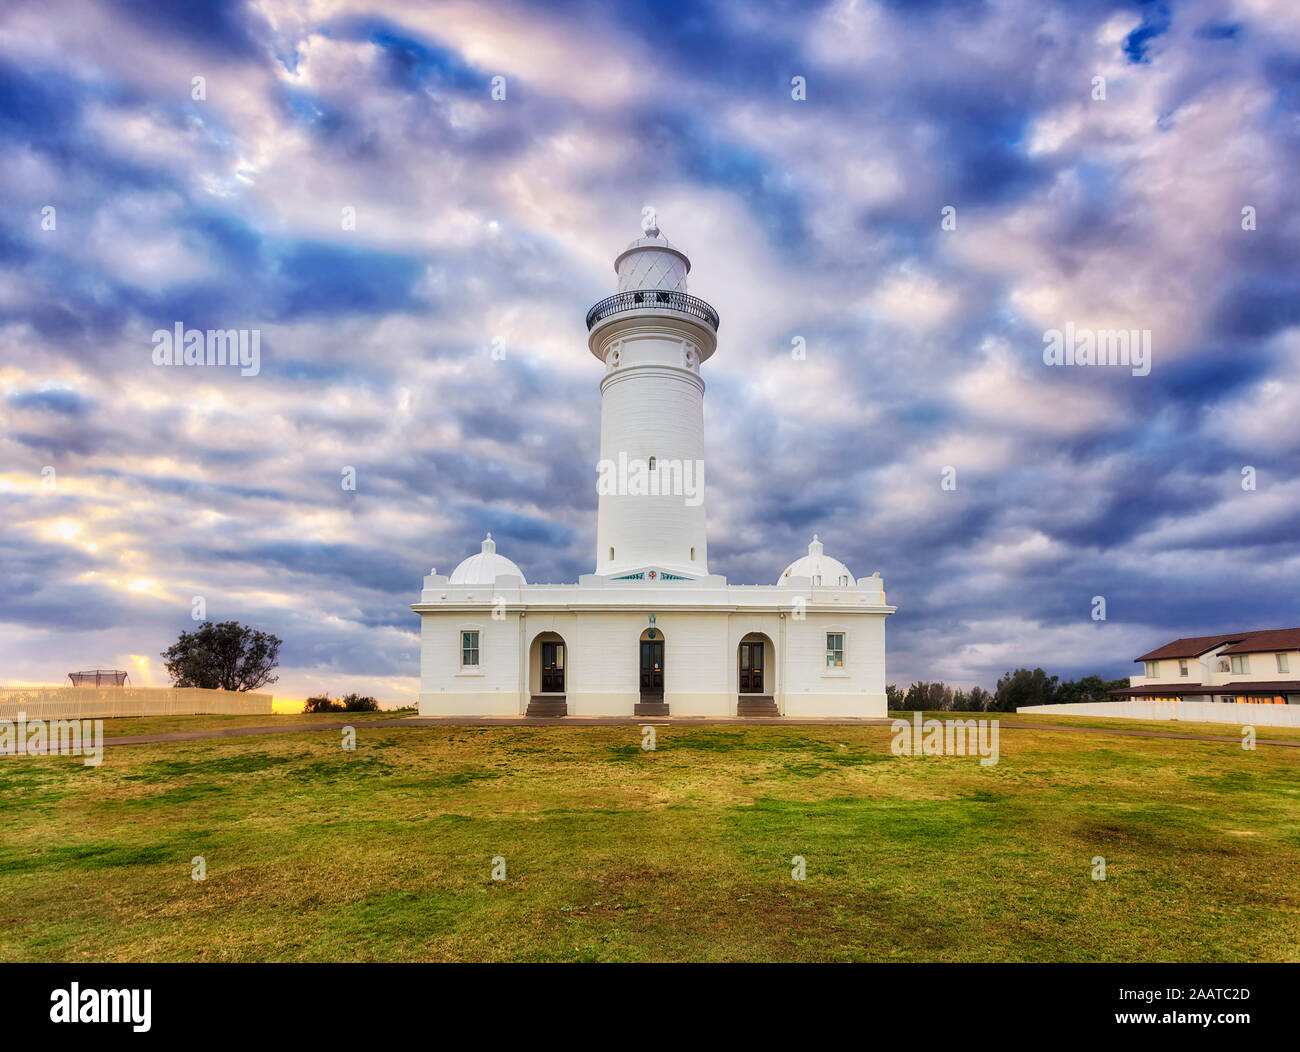 Facade of first Australian lighthouse Macquarie in Sydney against cloudy sky at sunrise - historic landmark built of white stones. Stock Photo